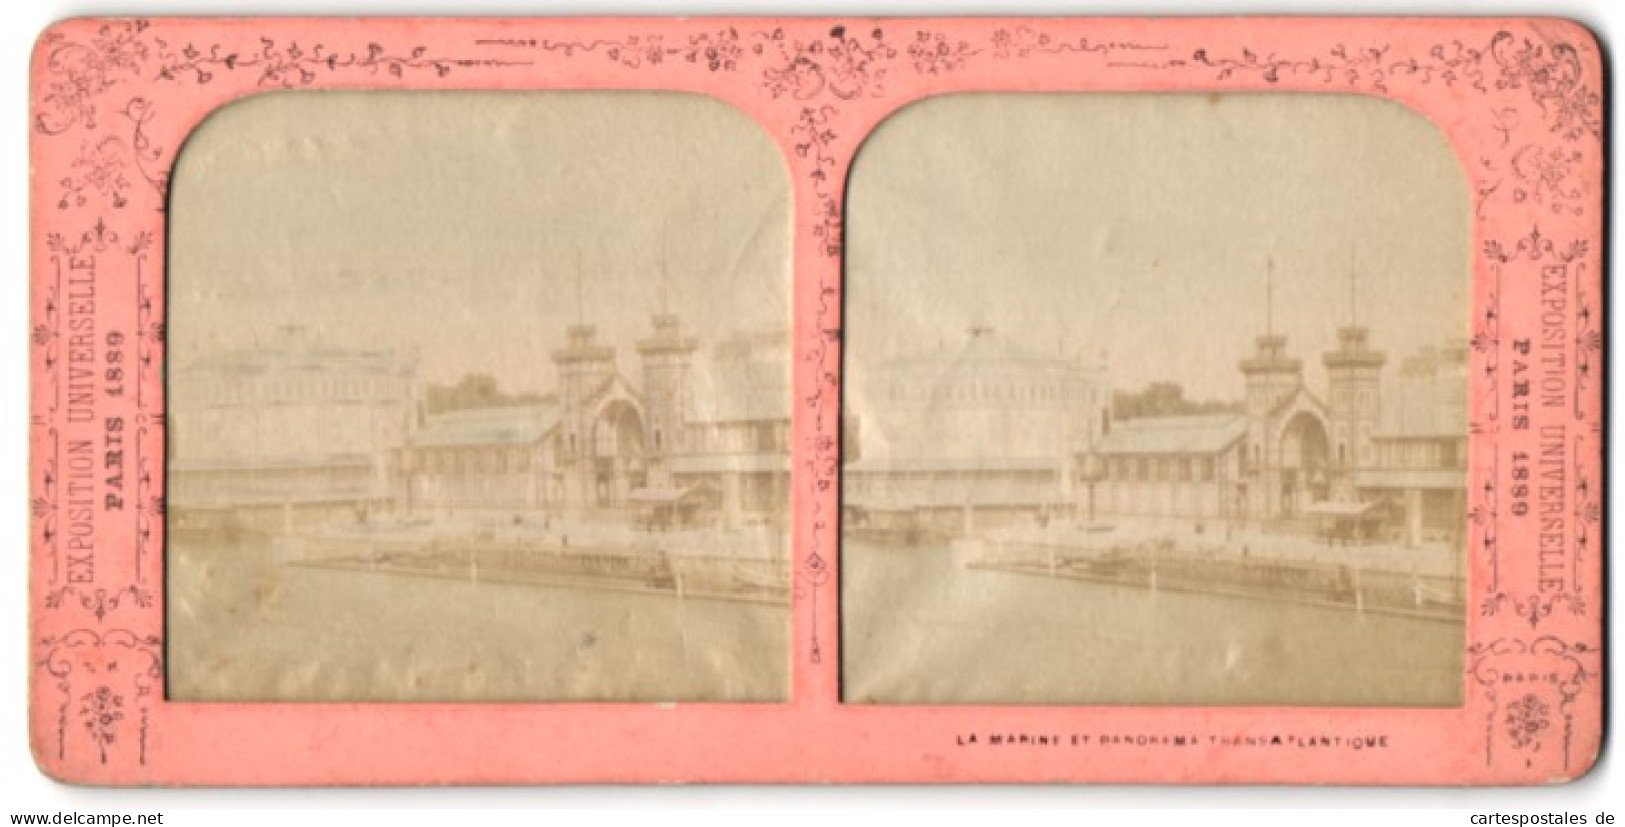 Stereo-Fotografie Fotograf Unbekannt, Ausstellung Pairs 1889, Exposition La Marine Et Panorama Transatlantique  - Stereoscopic